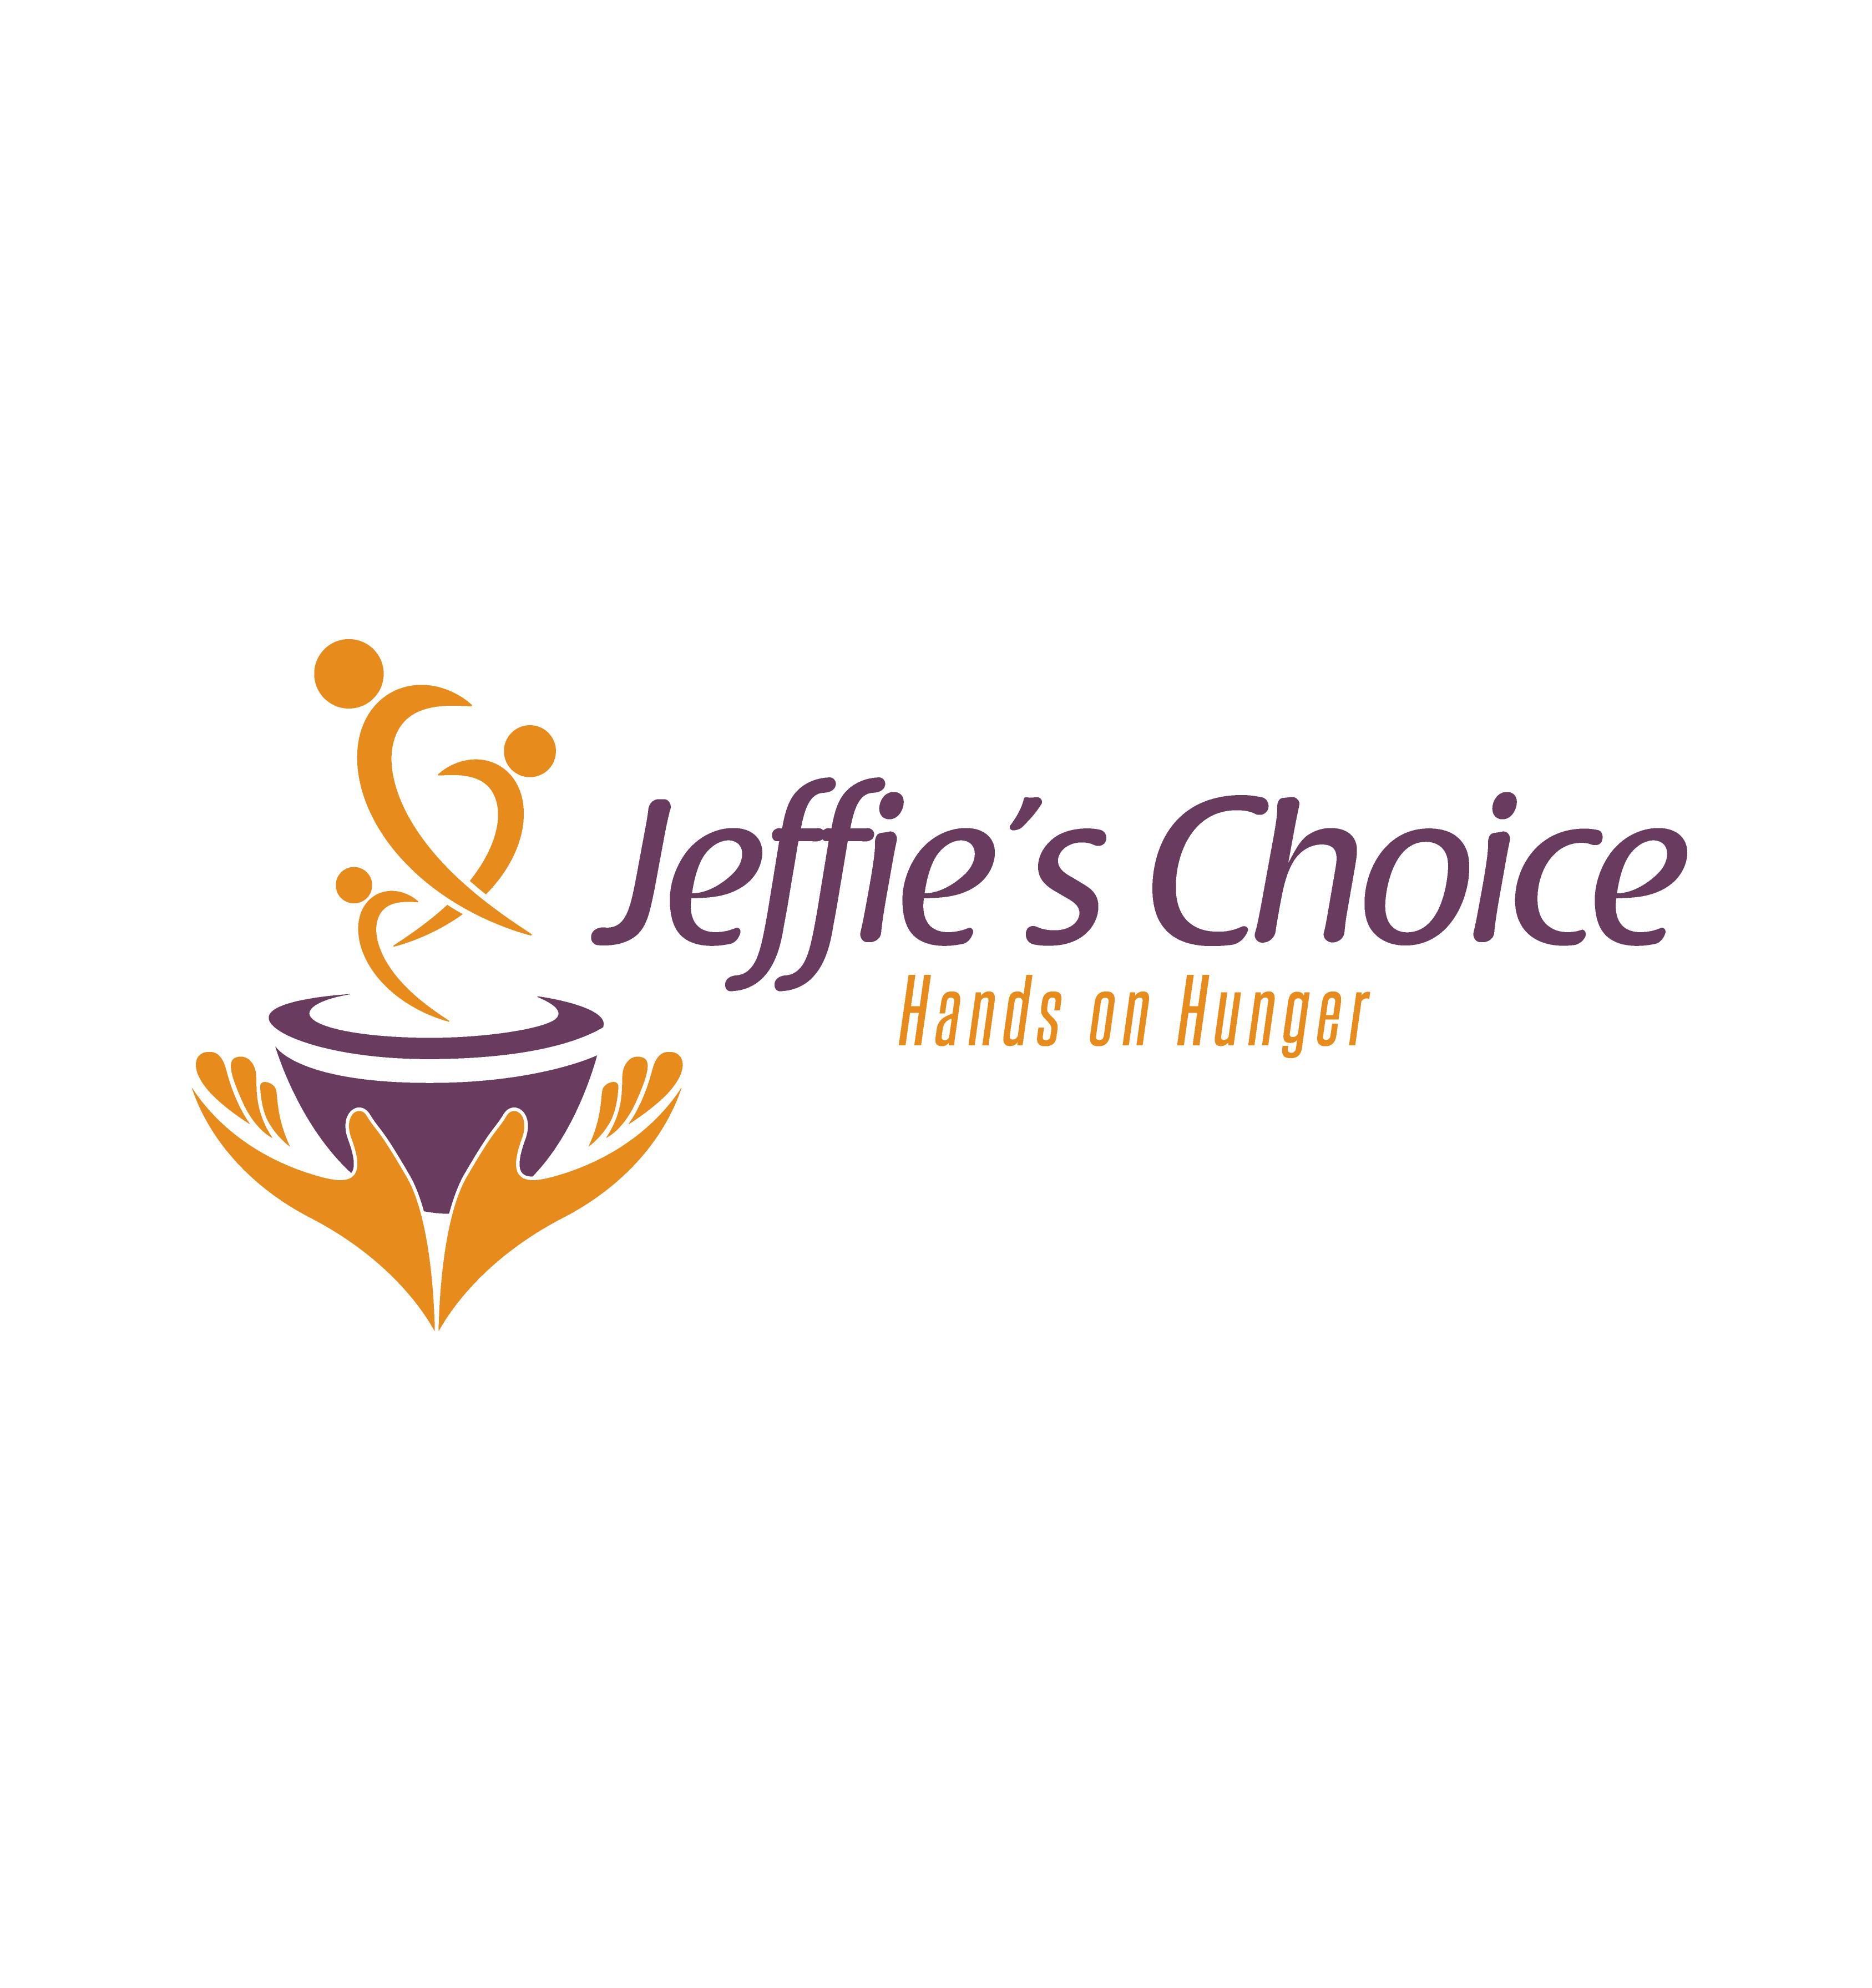 Jeffie's Choice